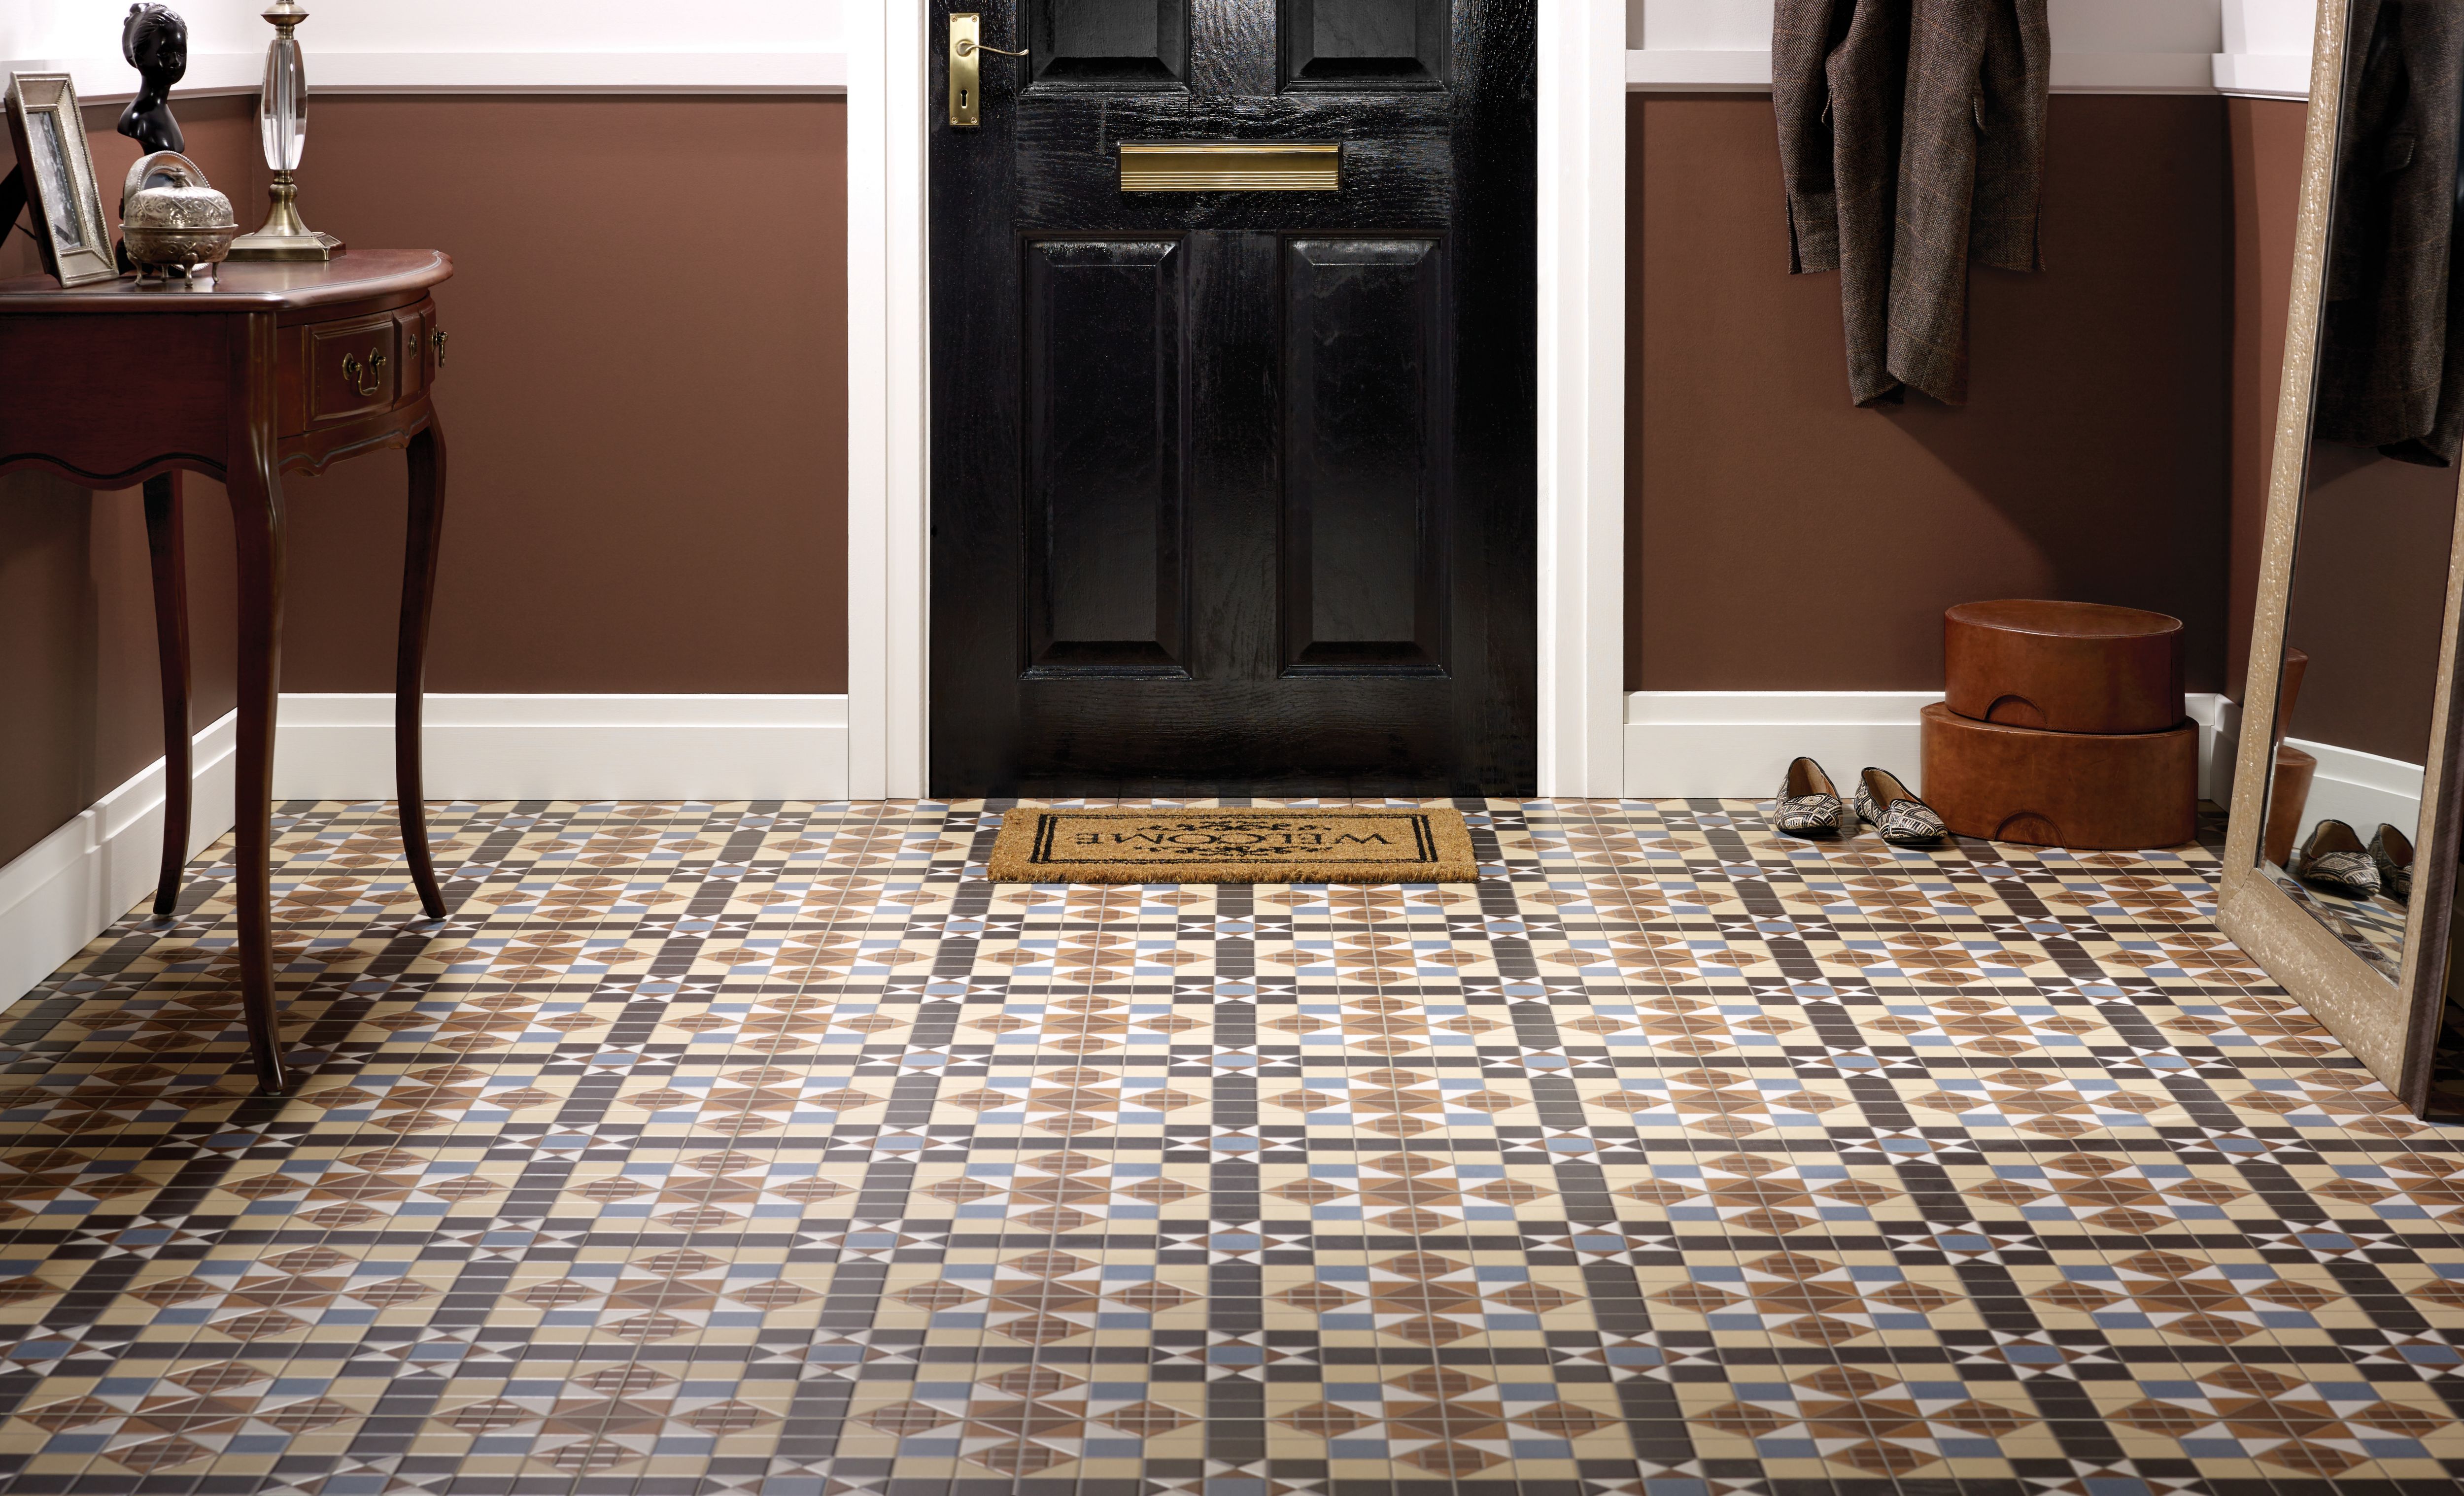 Wickes Dorset Marron Patterned Ceramic Wall & Floor Tile - 316 x 316mm